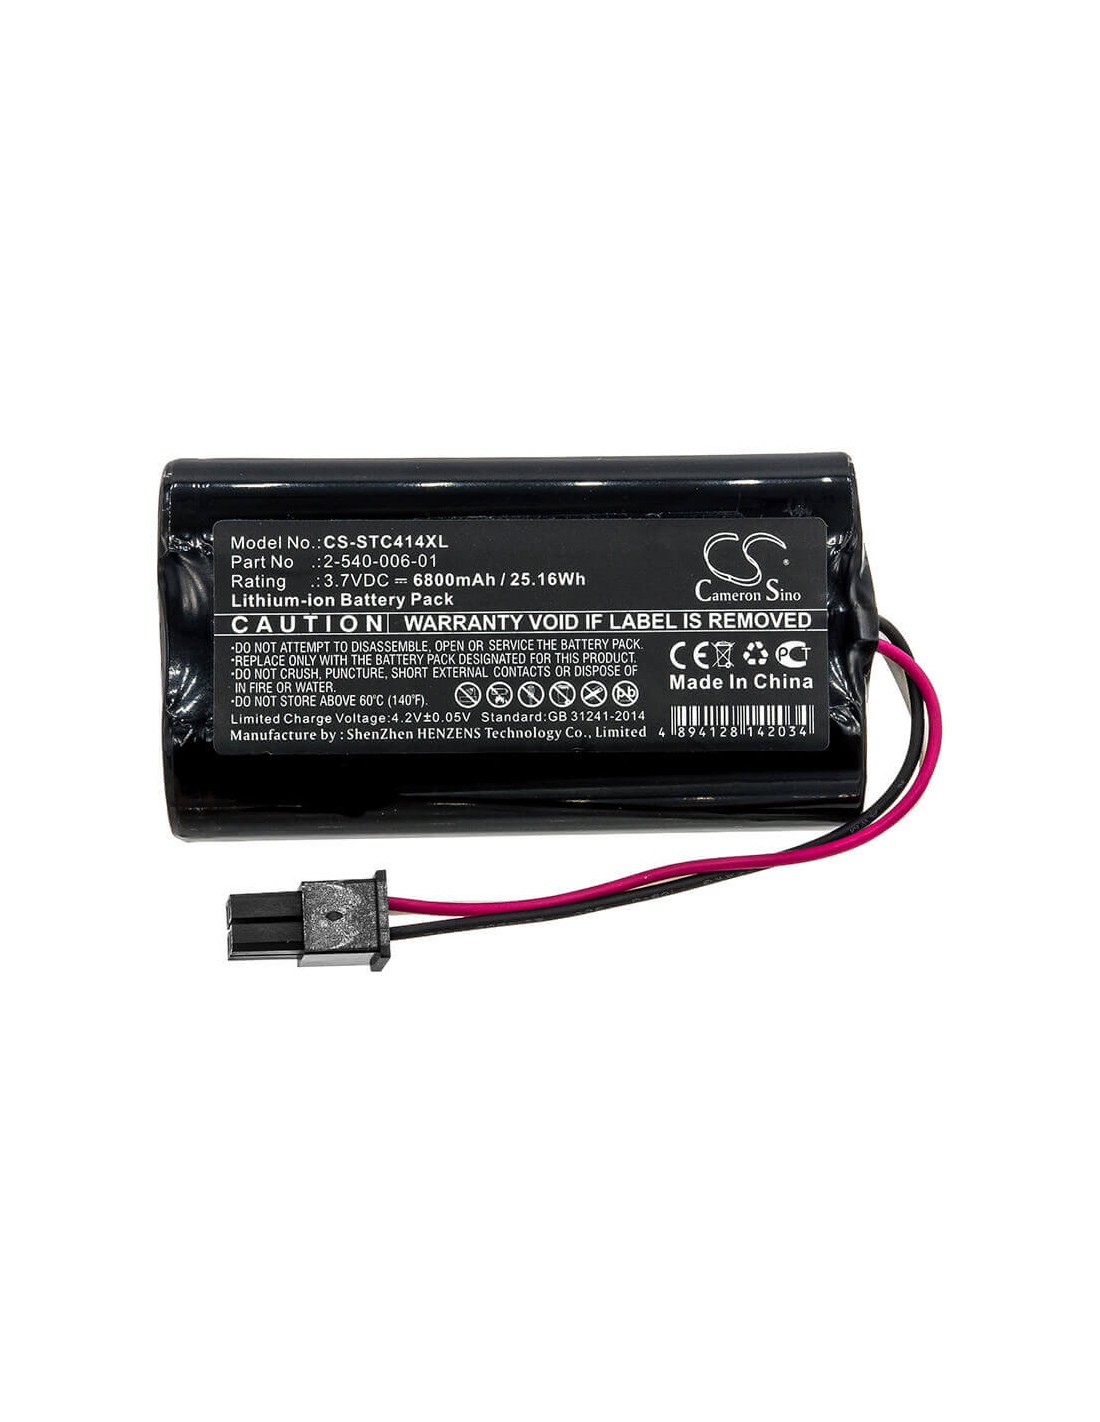 Battery for Soundcast, Mld414, Outcast Melody 3.7V, 6800mAh - 25.16Wh